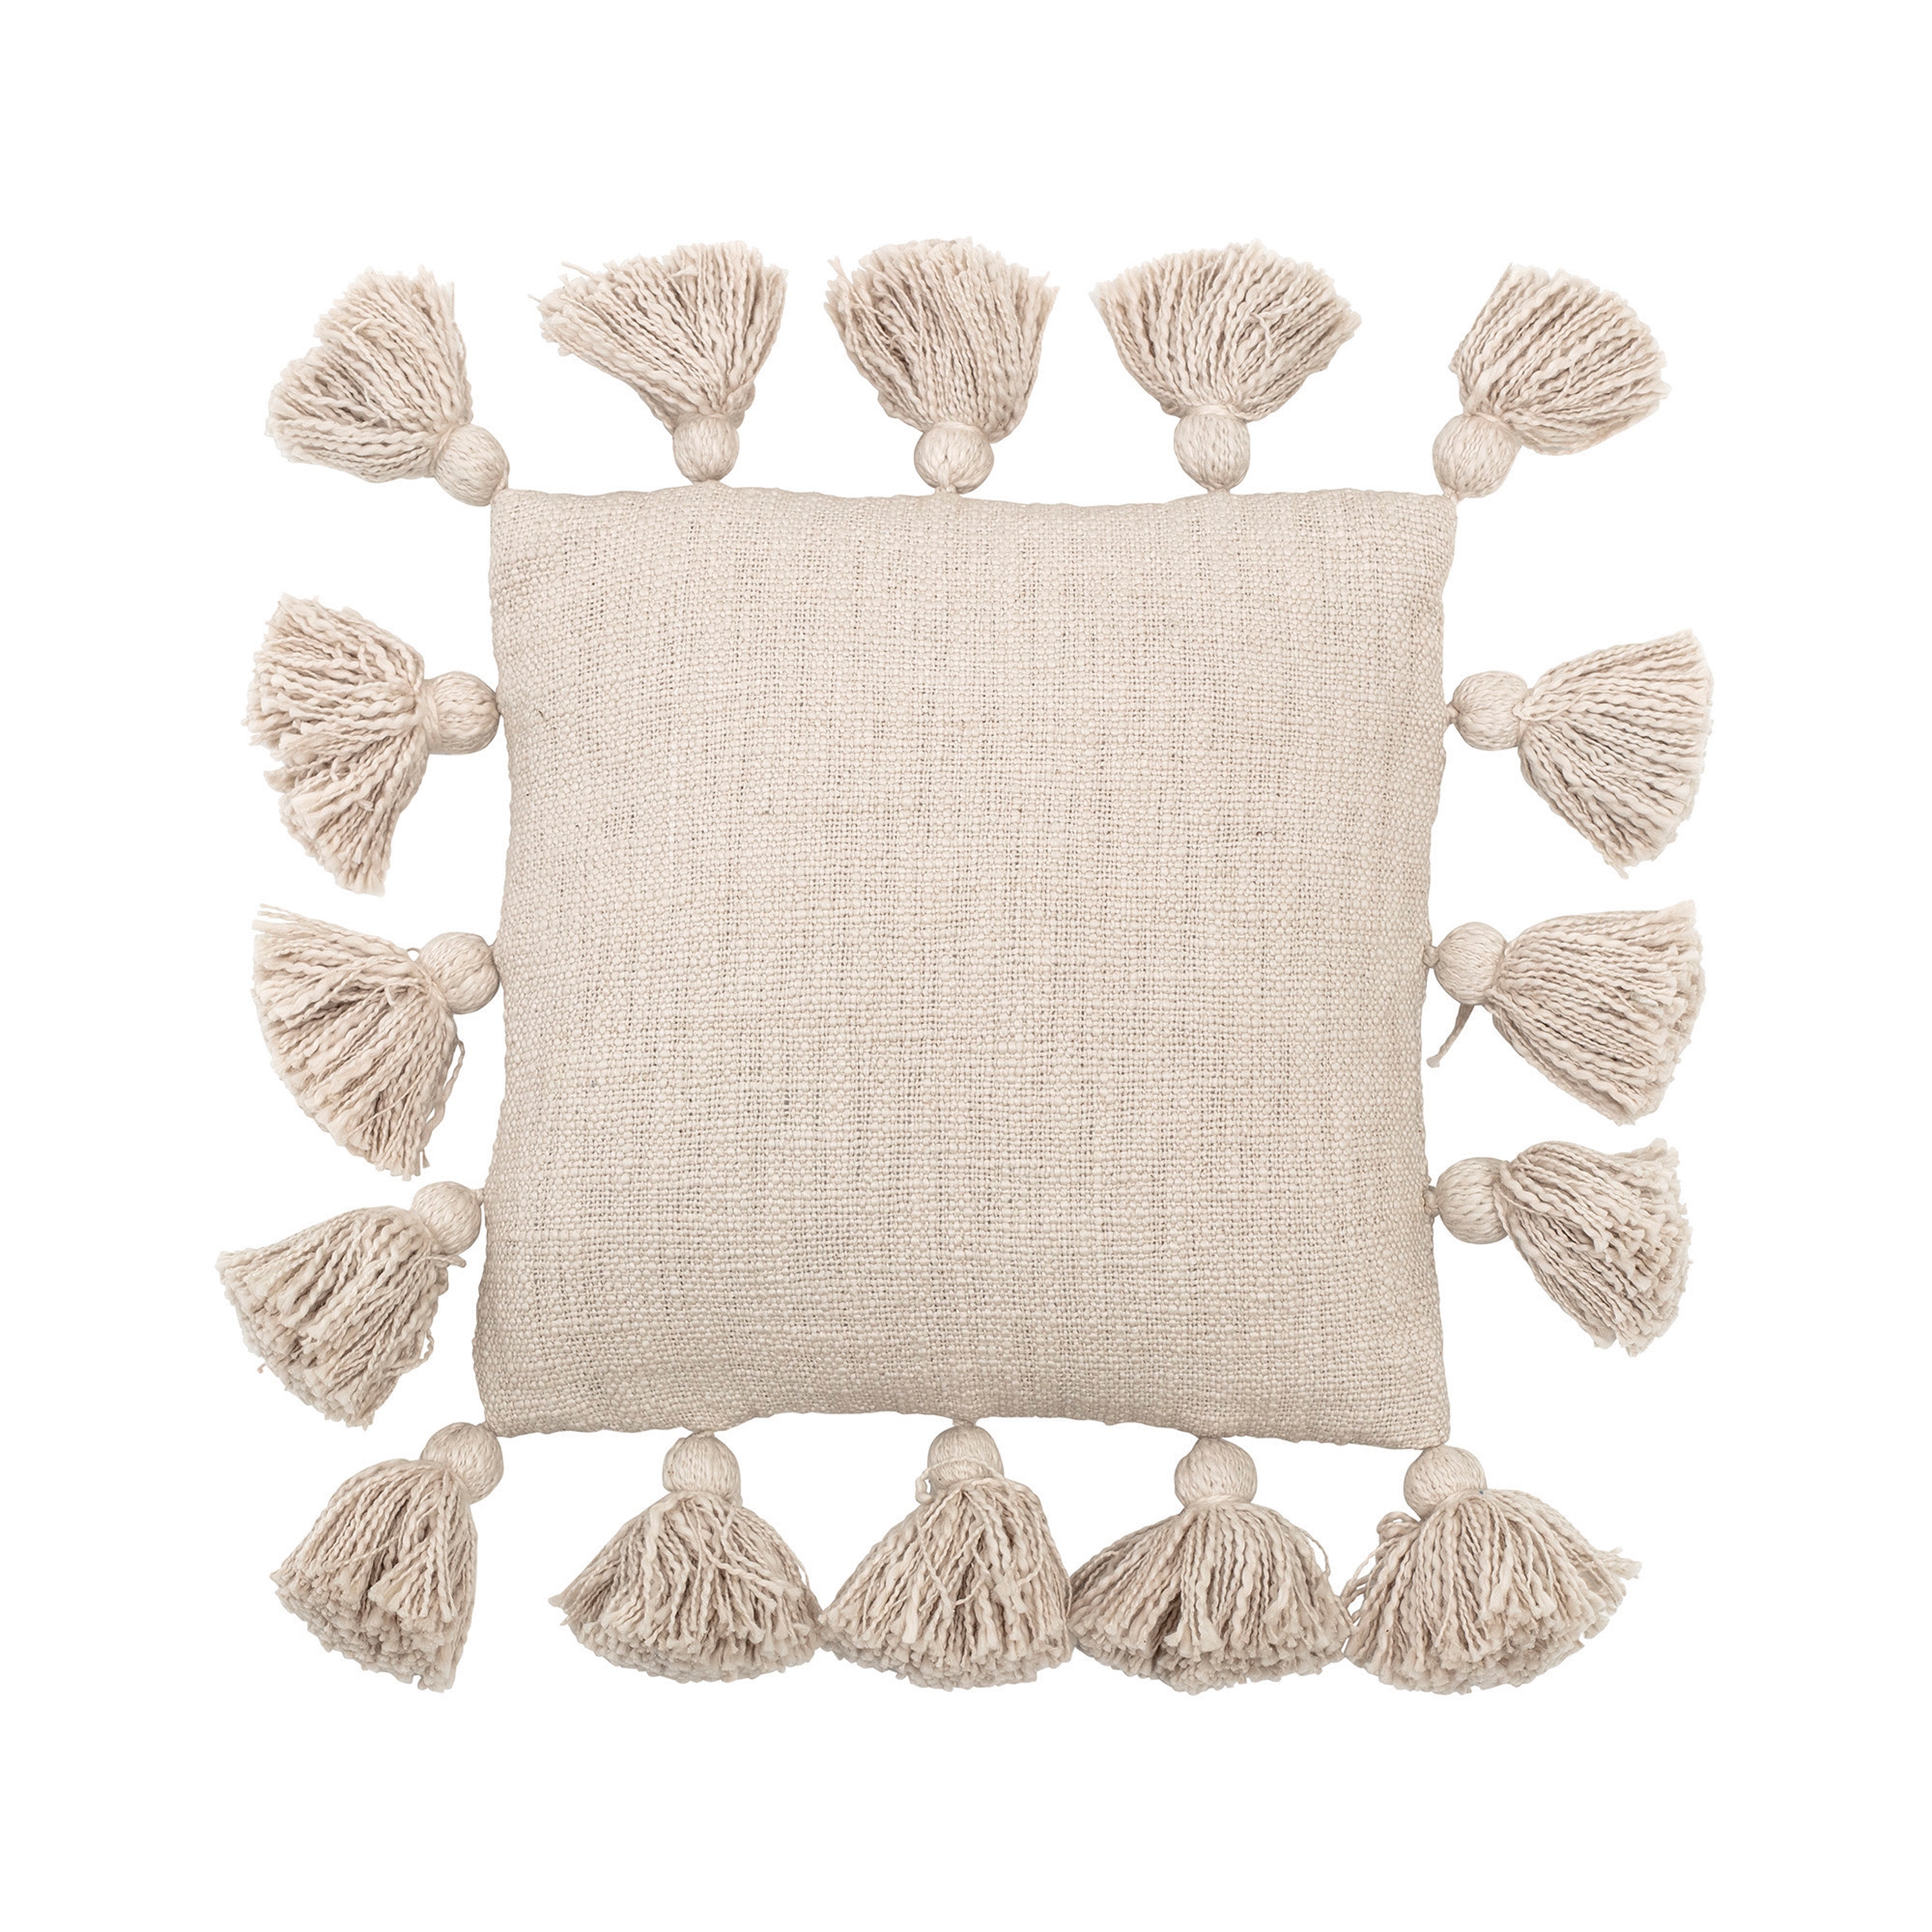 Mini Square Cream Cotton Pillow with Tassels - Image 0